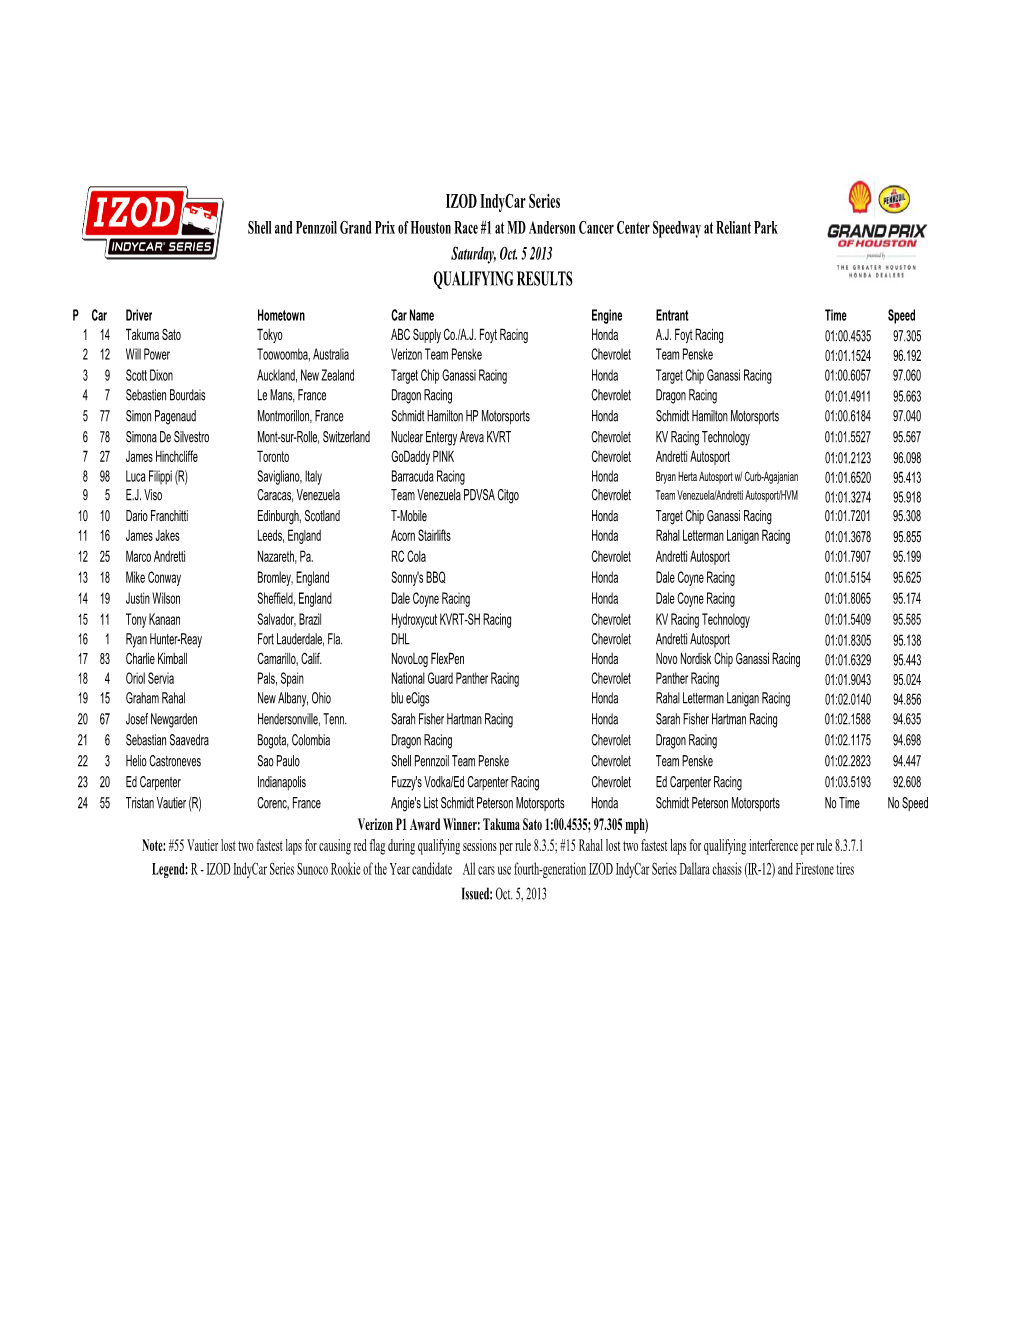 Grand Prix of Baltimore Qual Results